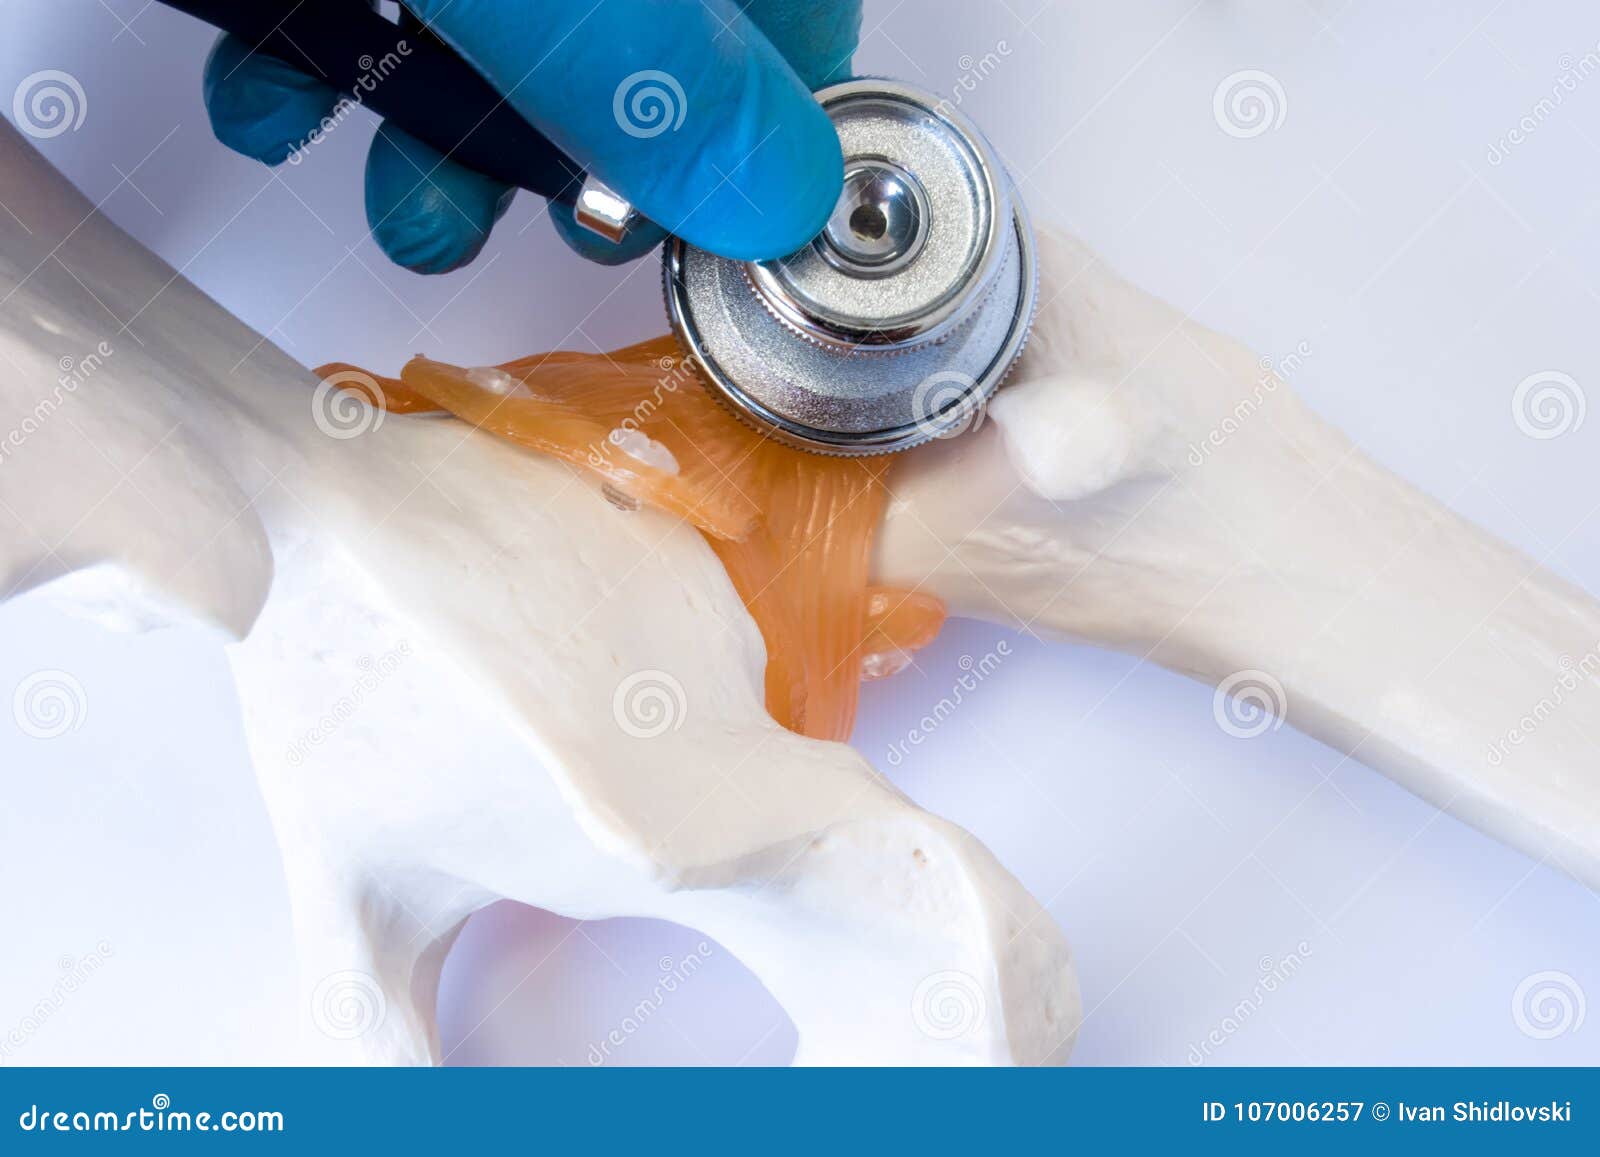 traumatologist examines stethoscope femur and hip joint. photo for use in orthopedics and traumatology,  process of diagnosi